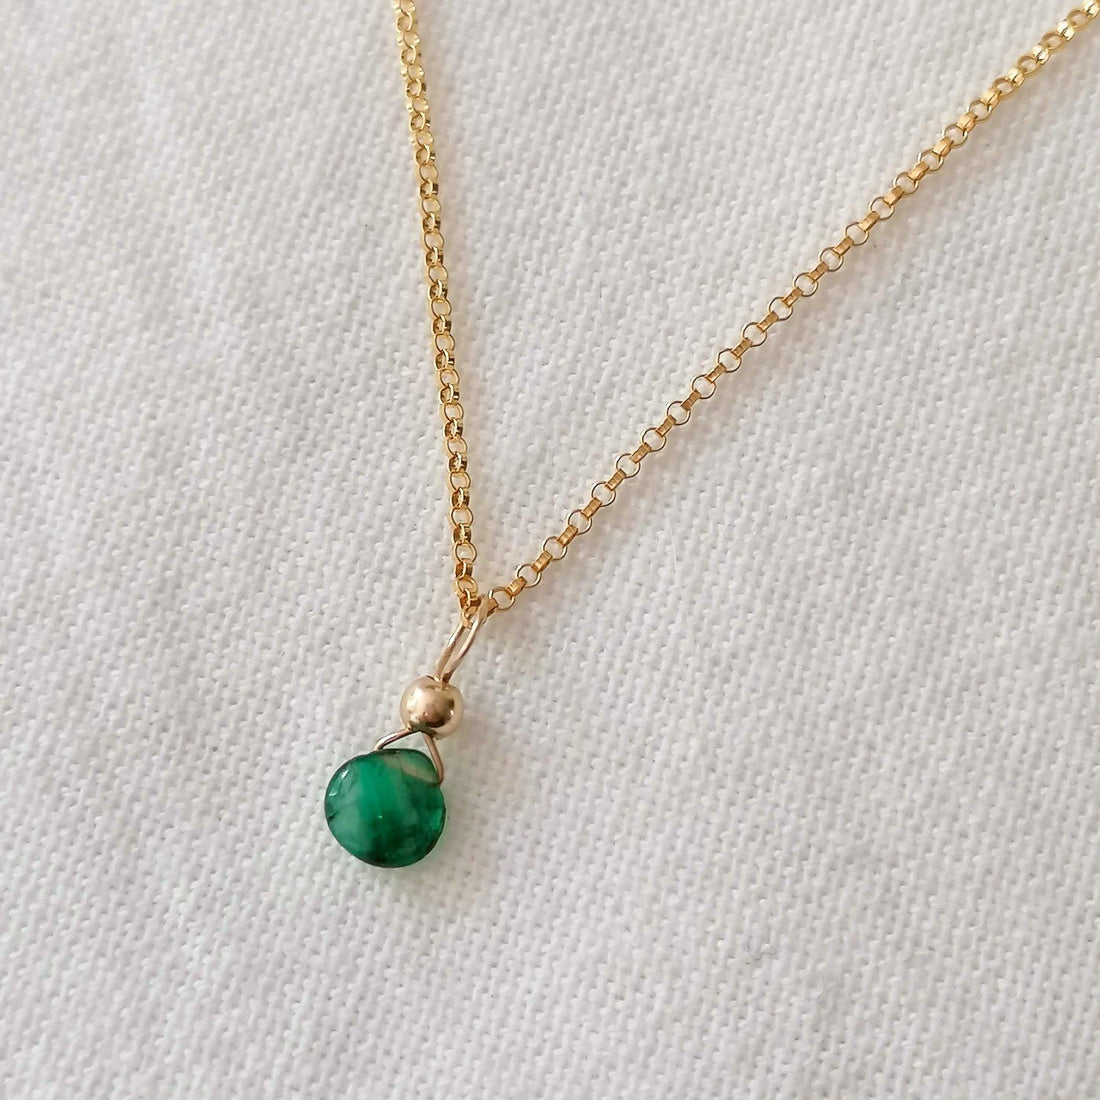 Emerald Isla Pendant in Gold Necklaces Sayulita Sol 16 inch Gold Plate Chain +$23 